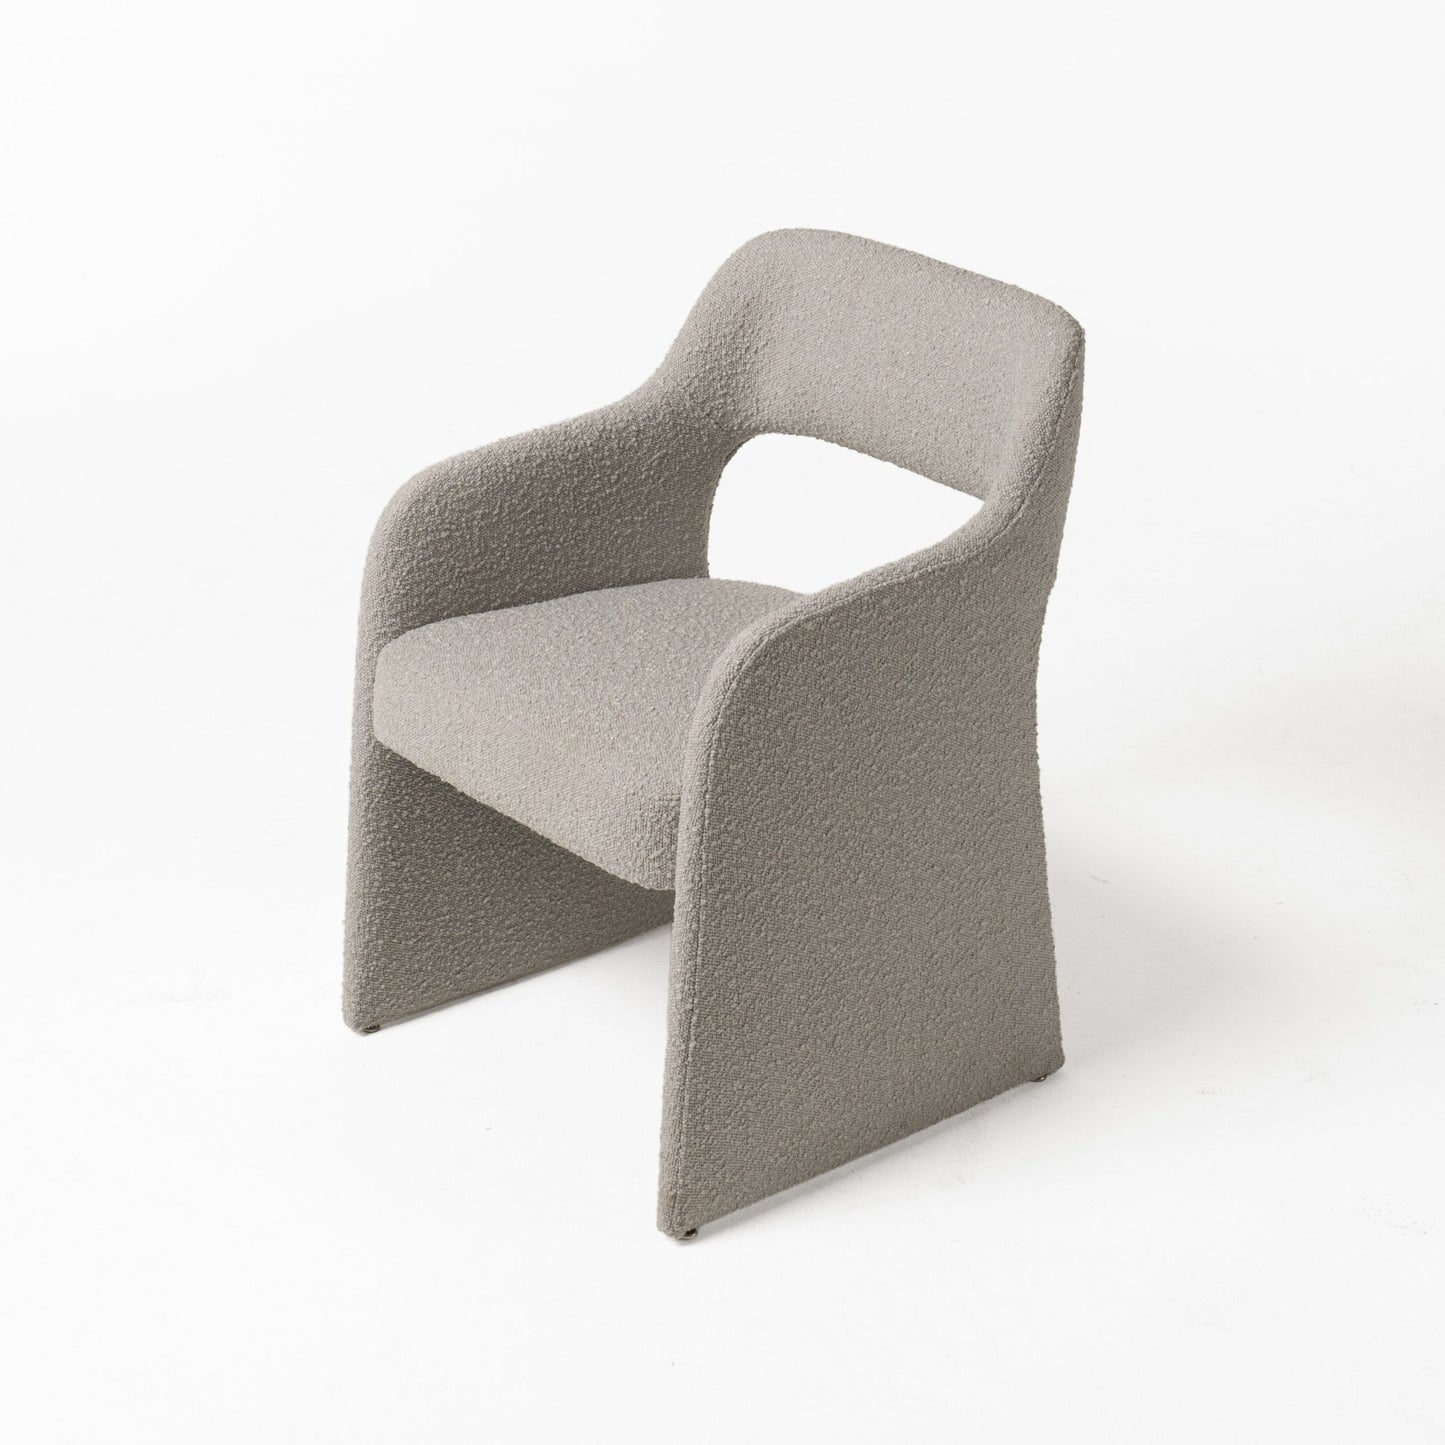 Modrest Bishop - Modern Grey Fabric Dining Chair